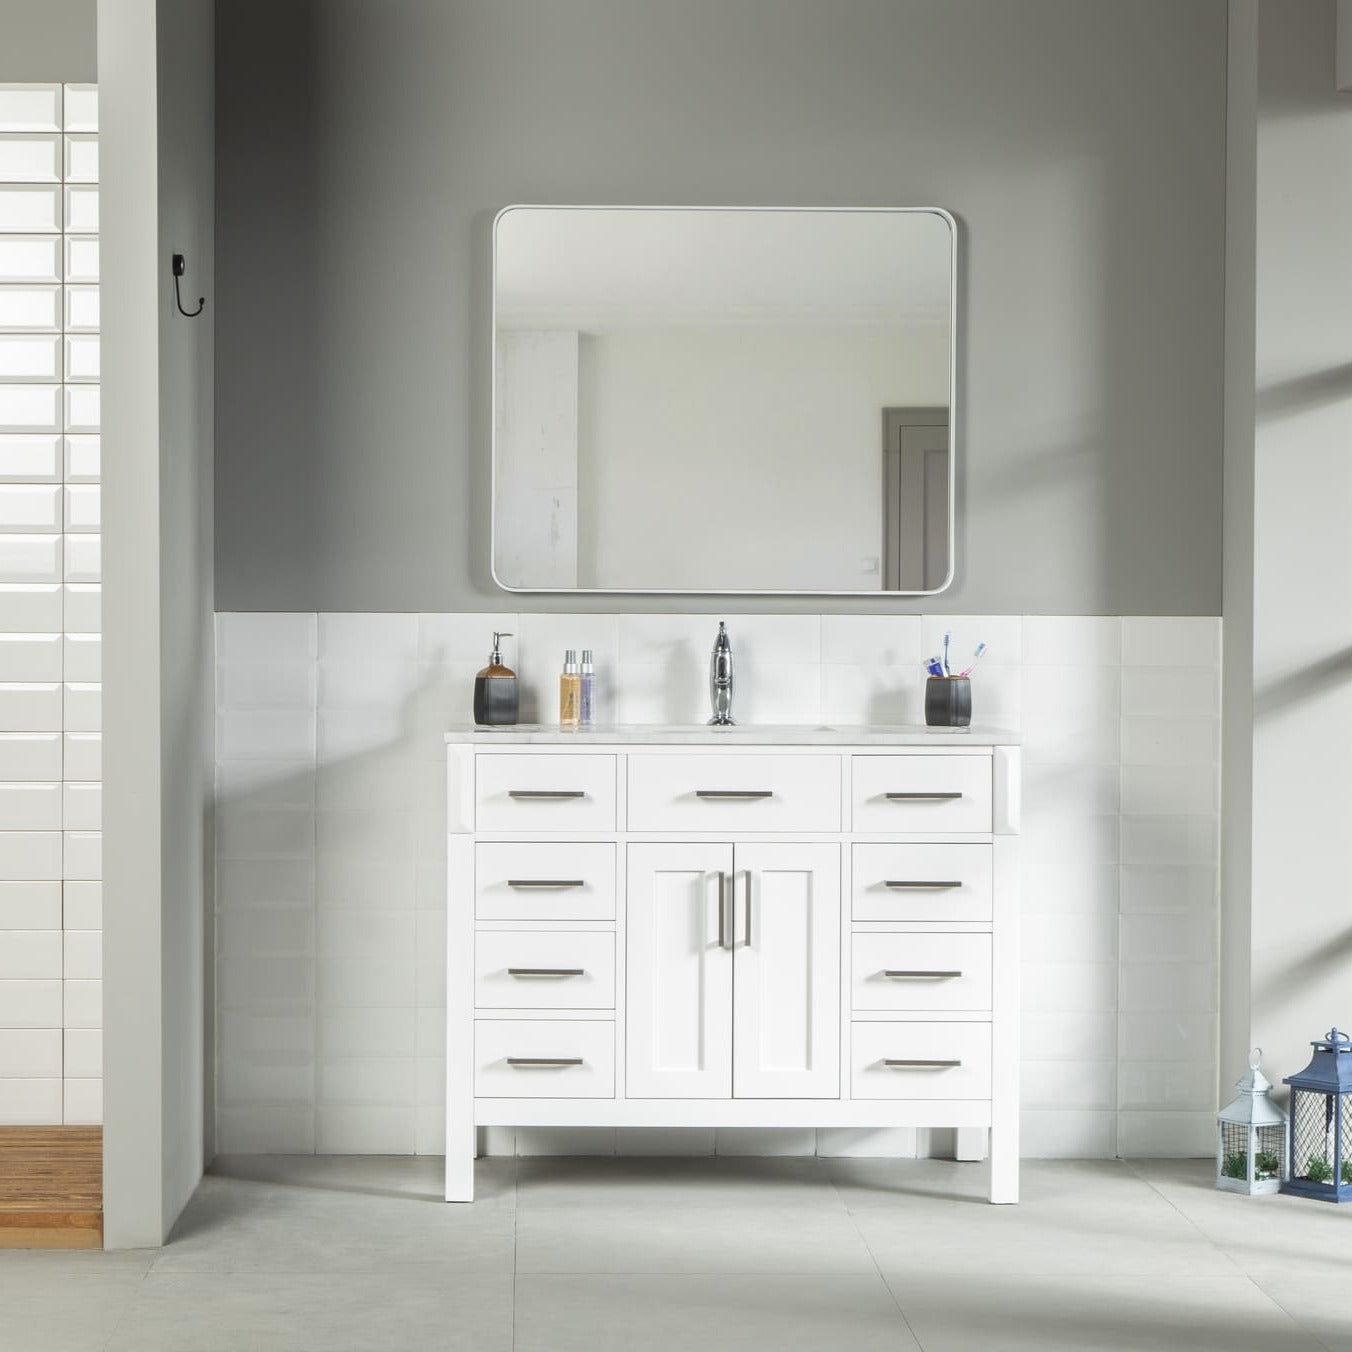 Fawna Bathroom Vanity Homelero 42"  #size_42"  #color_white  #hardware_brushed nickel